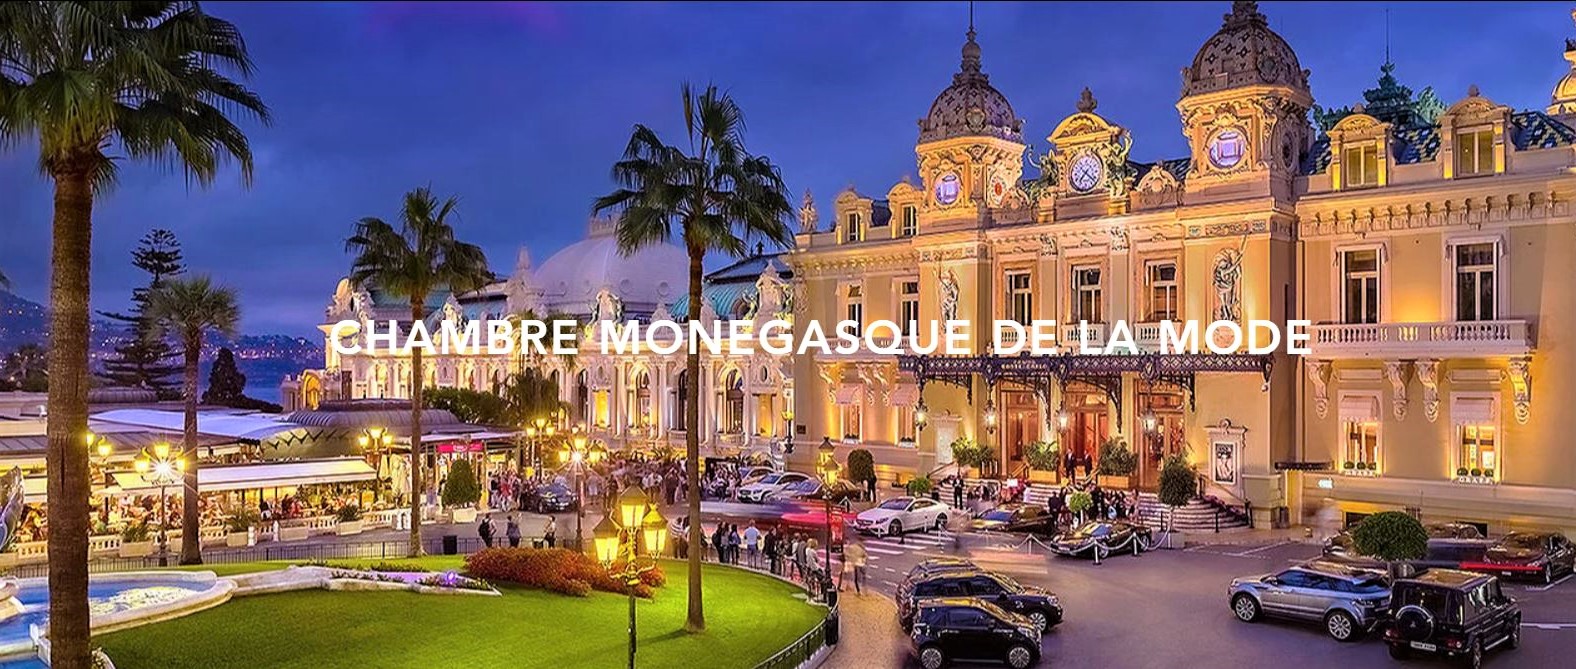 Monaco Monte Carlo de la mode image horizontal (2) cropped.JPG